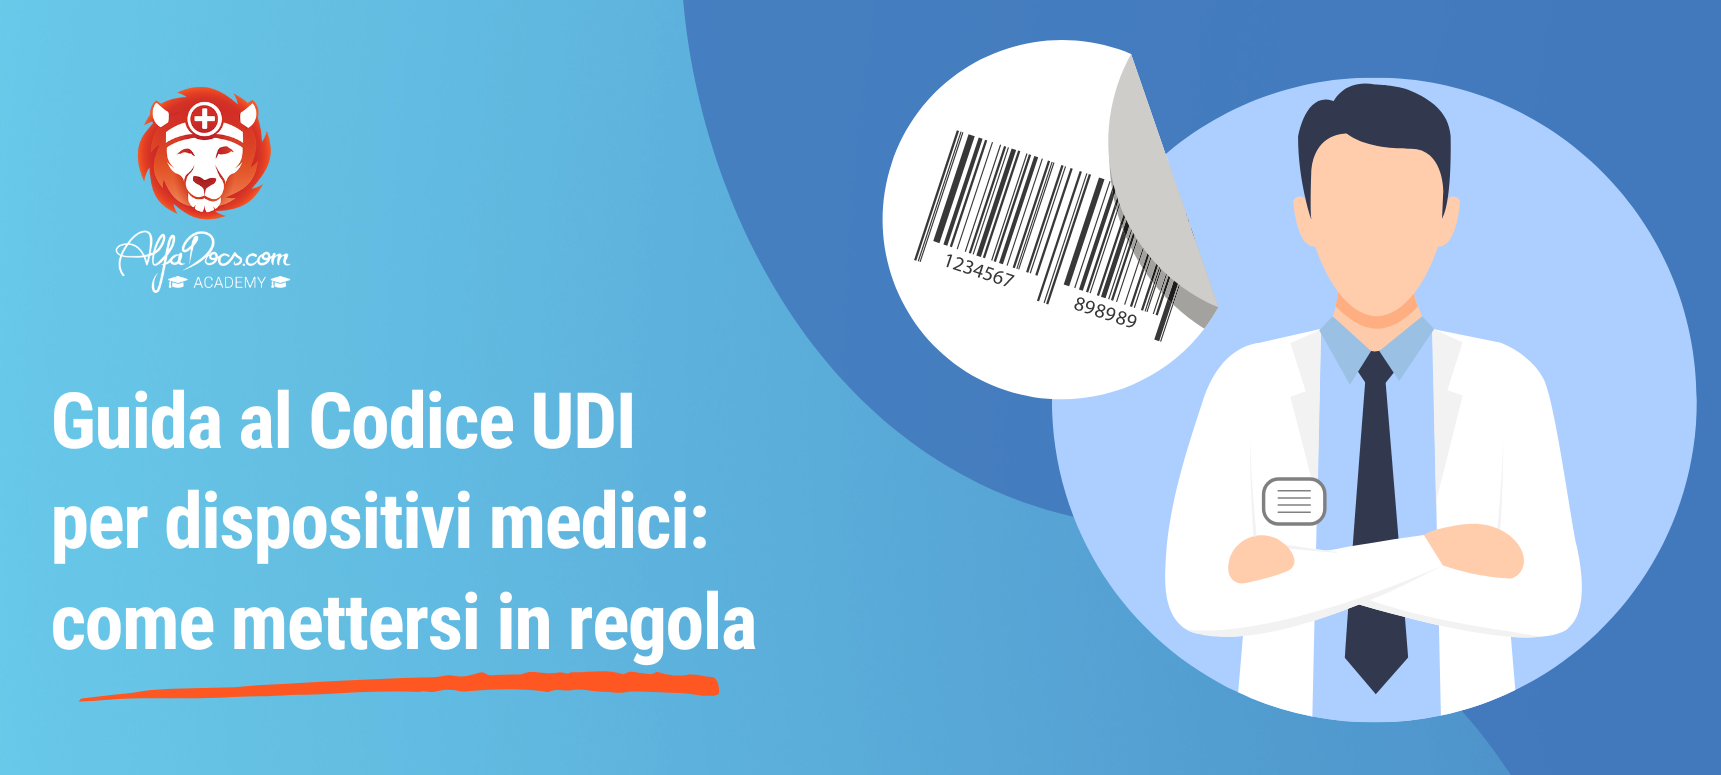 Guida al Codice UDI per dispositivi medici: come mettersi in regola